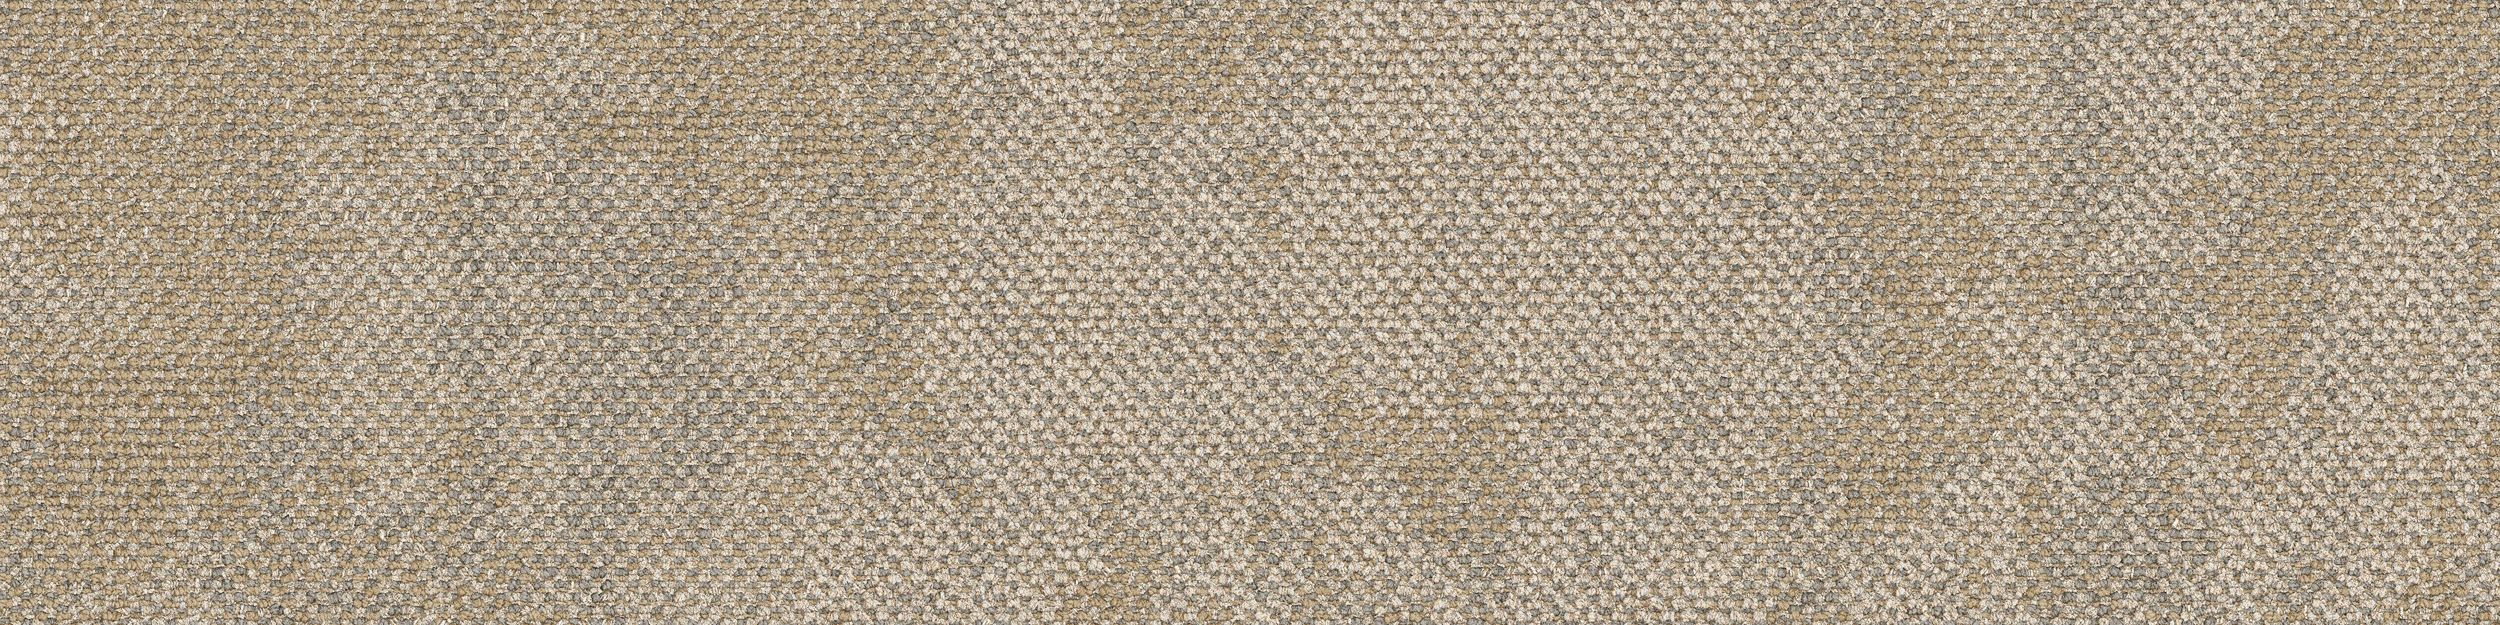 Dry Bark carpet tile in Freshwater Neutral image number 2